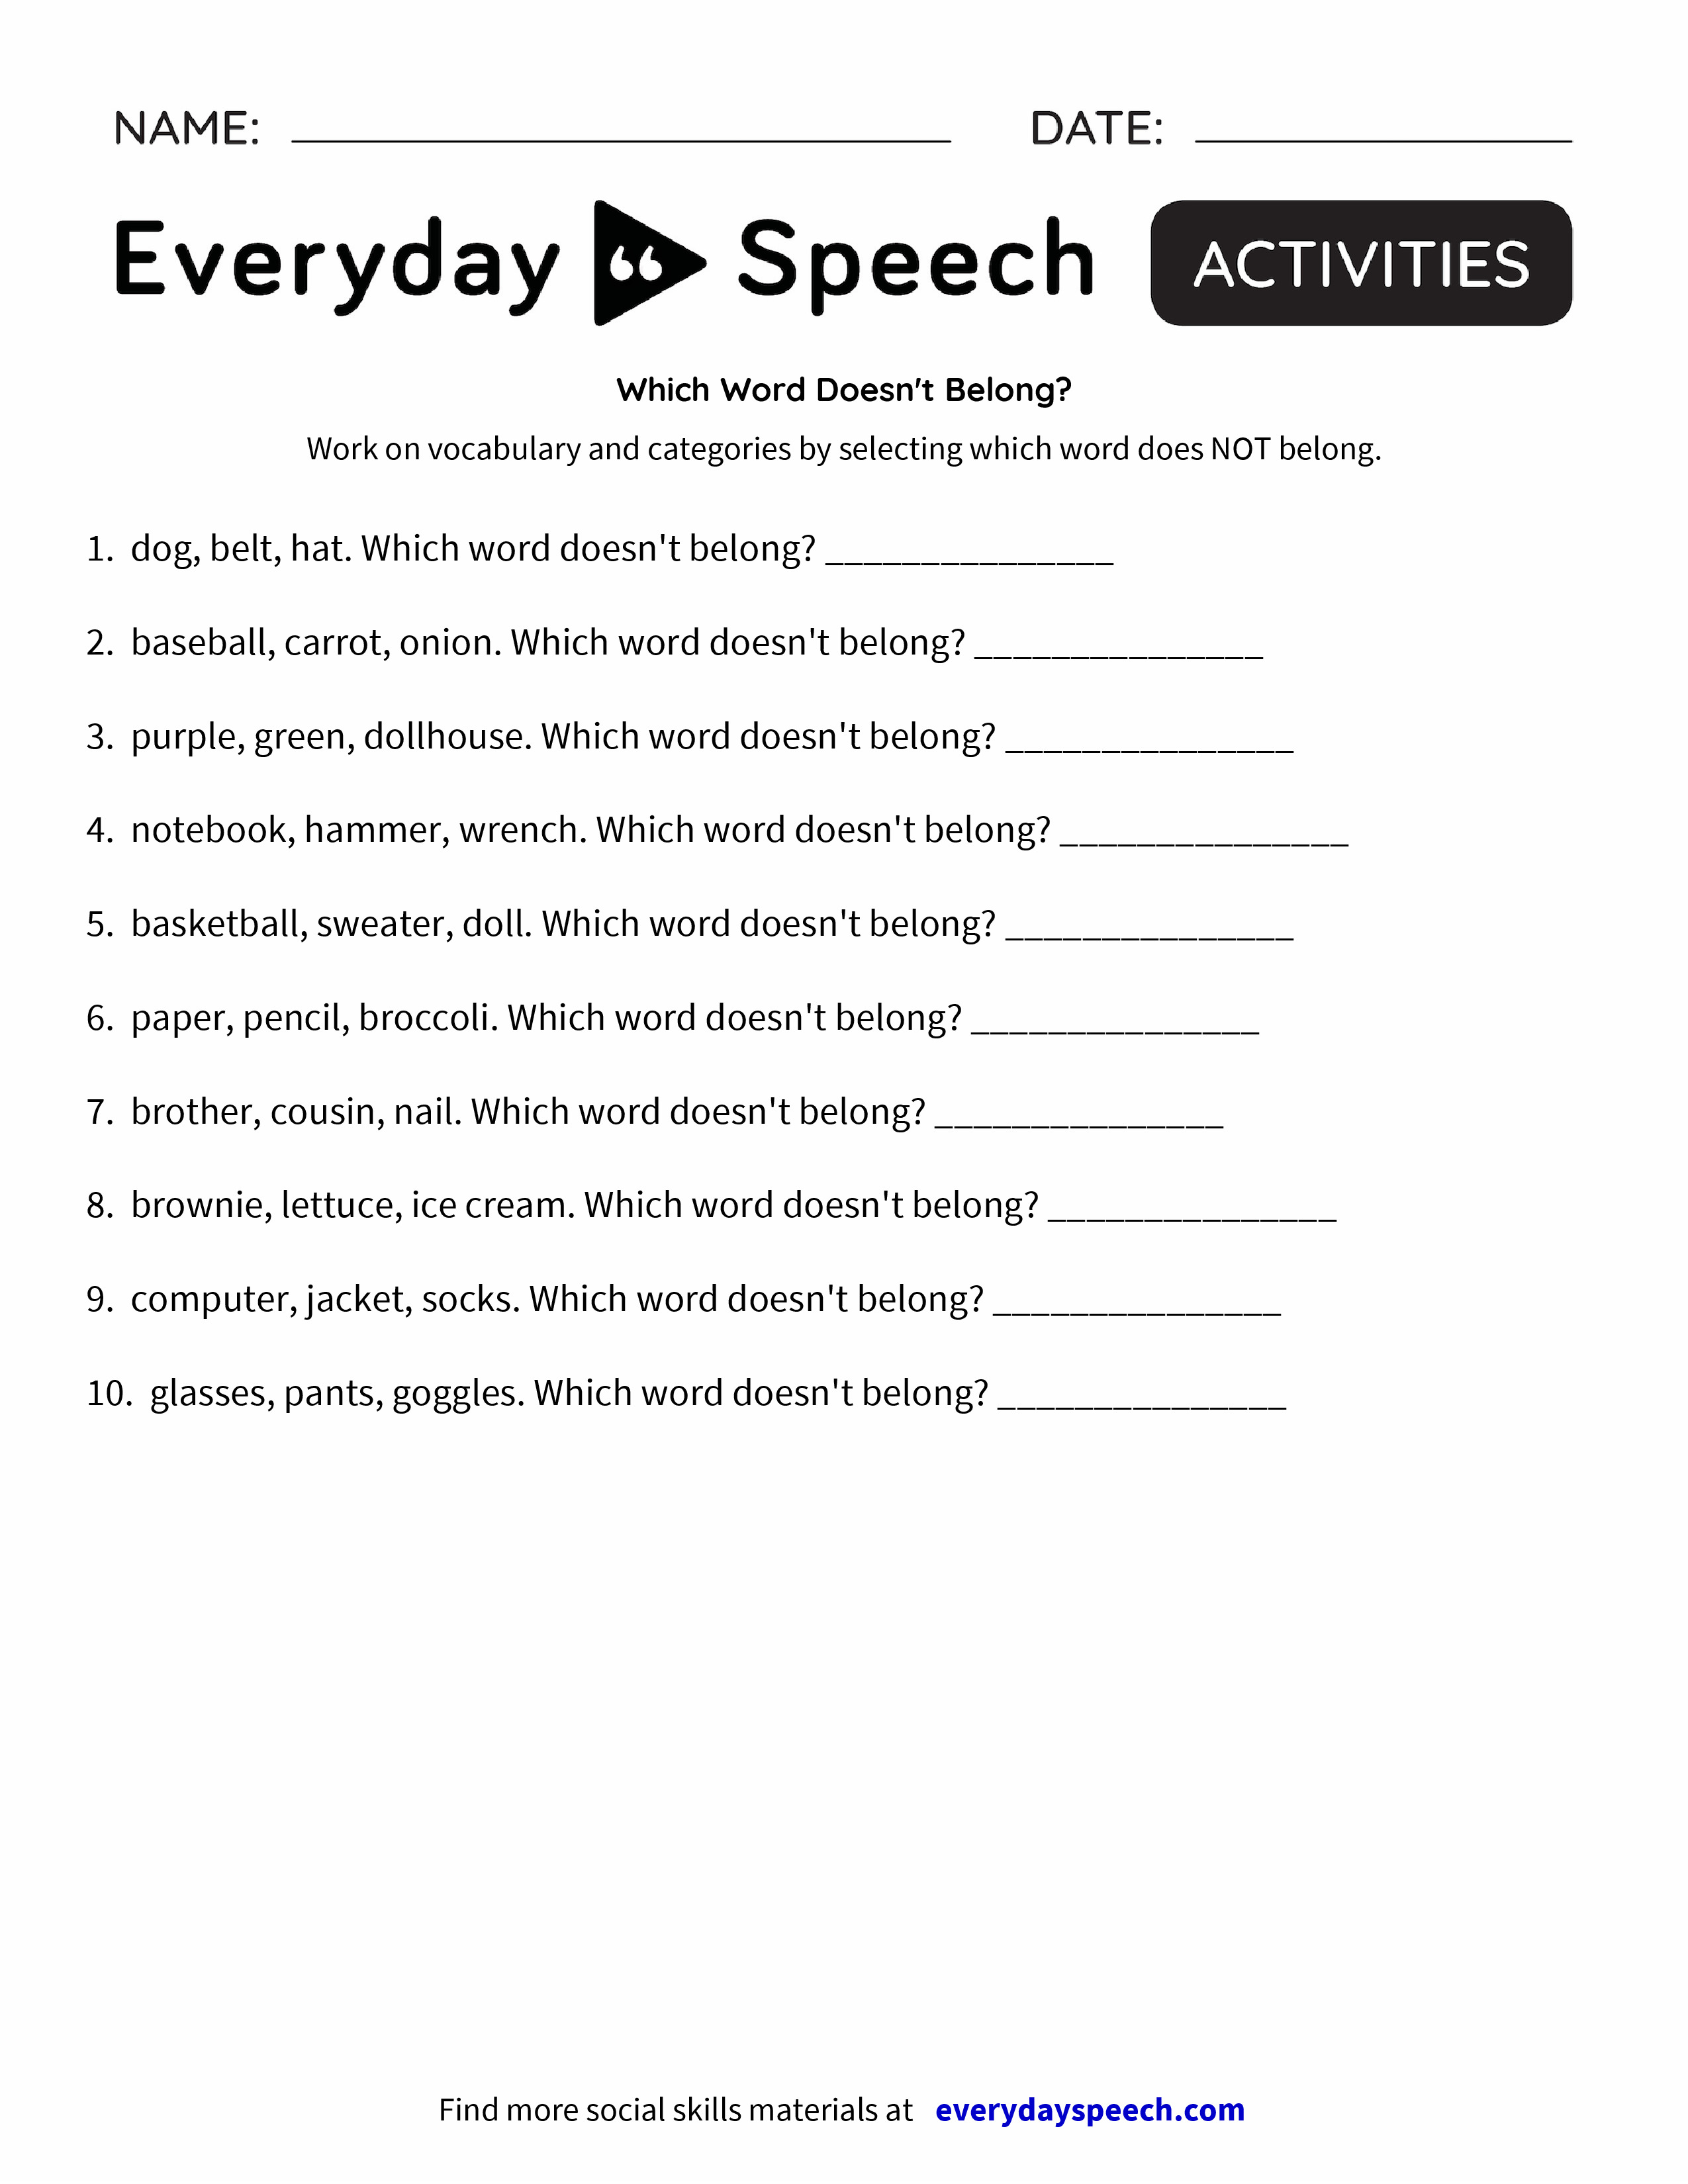 which-word-doesn-t-belong-everyday-speech-everyday-speech